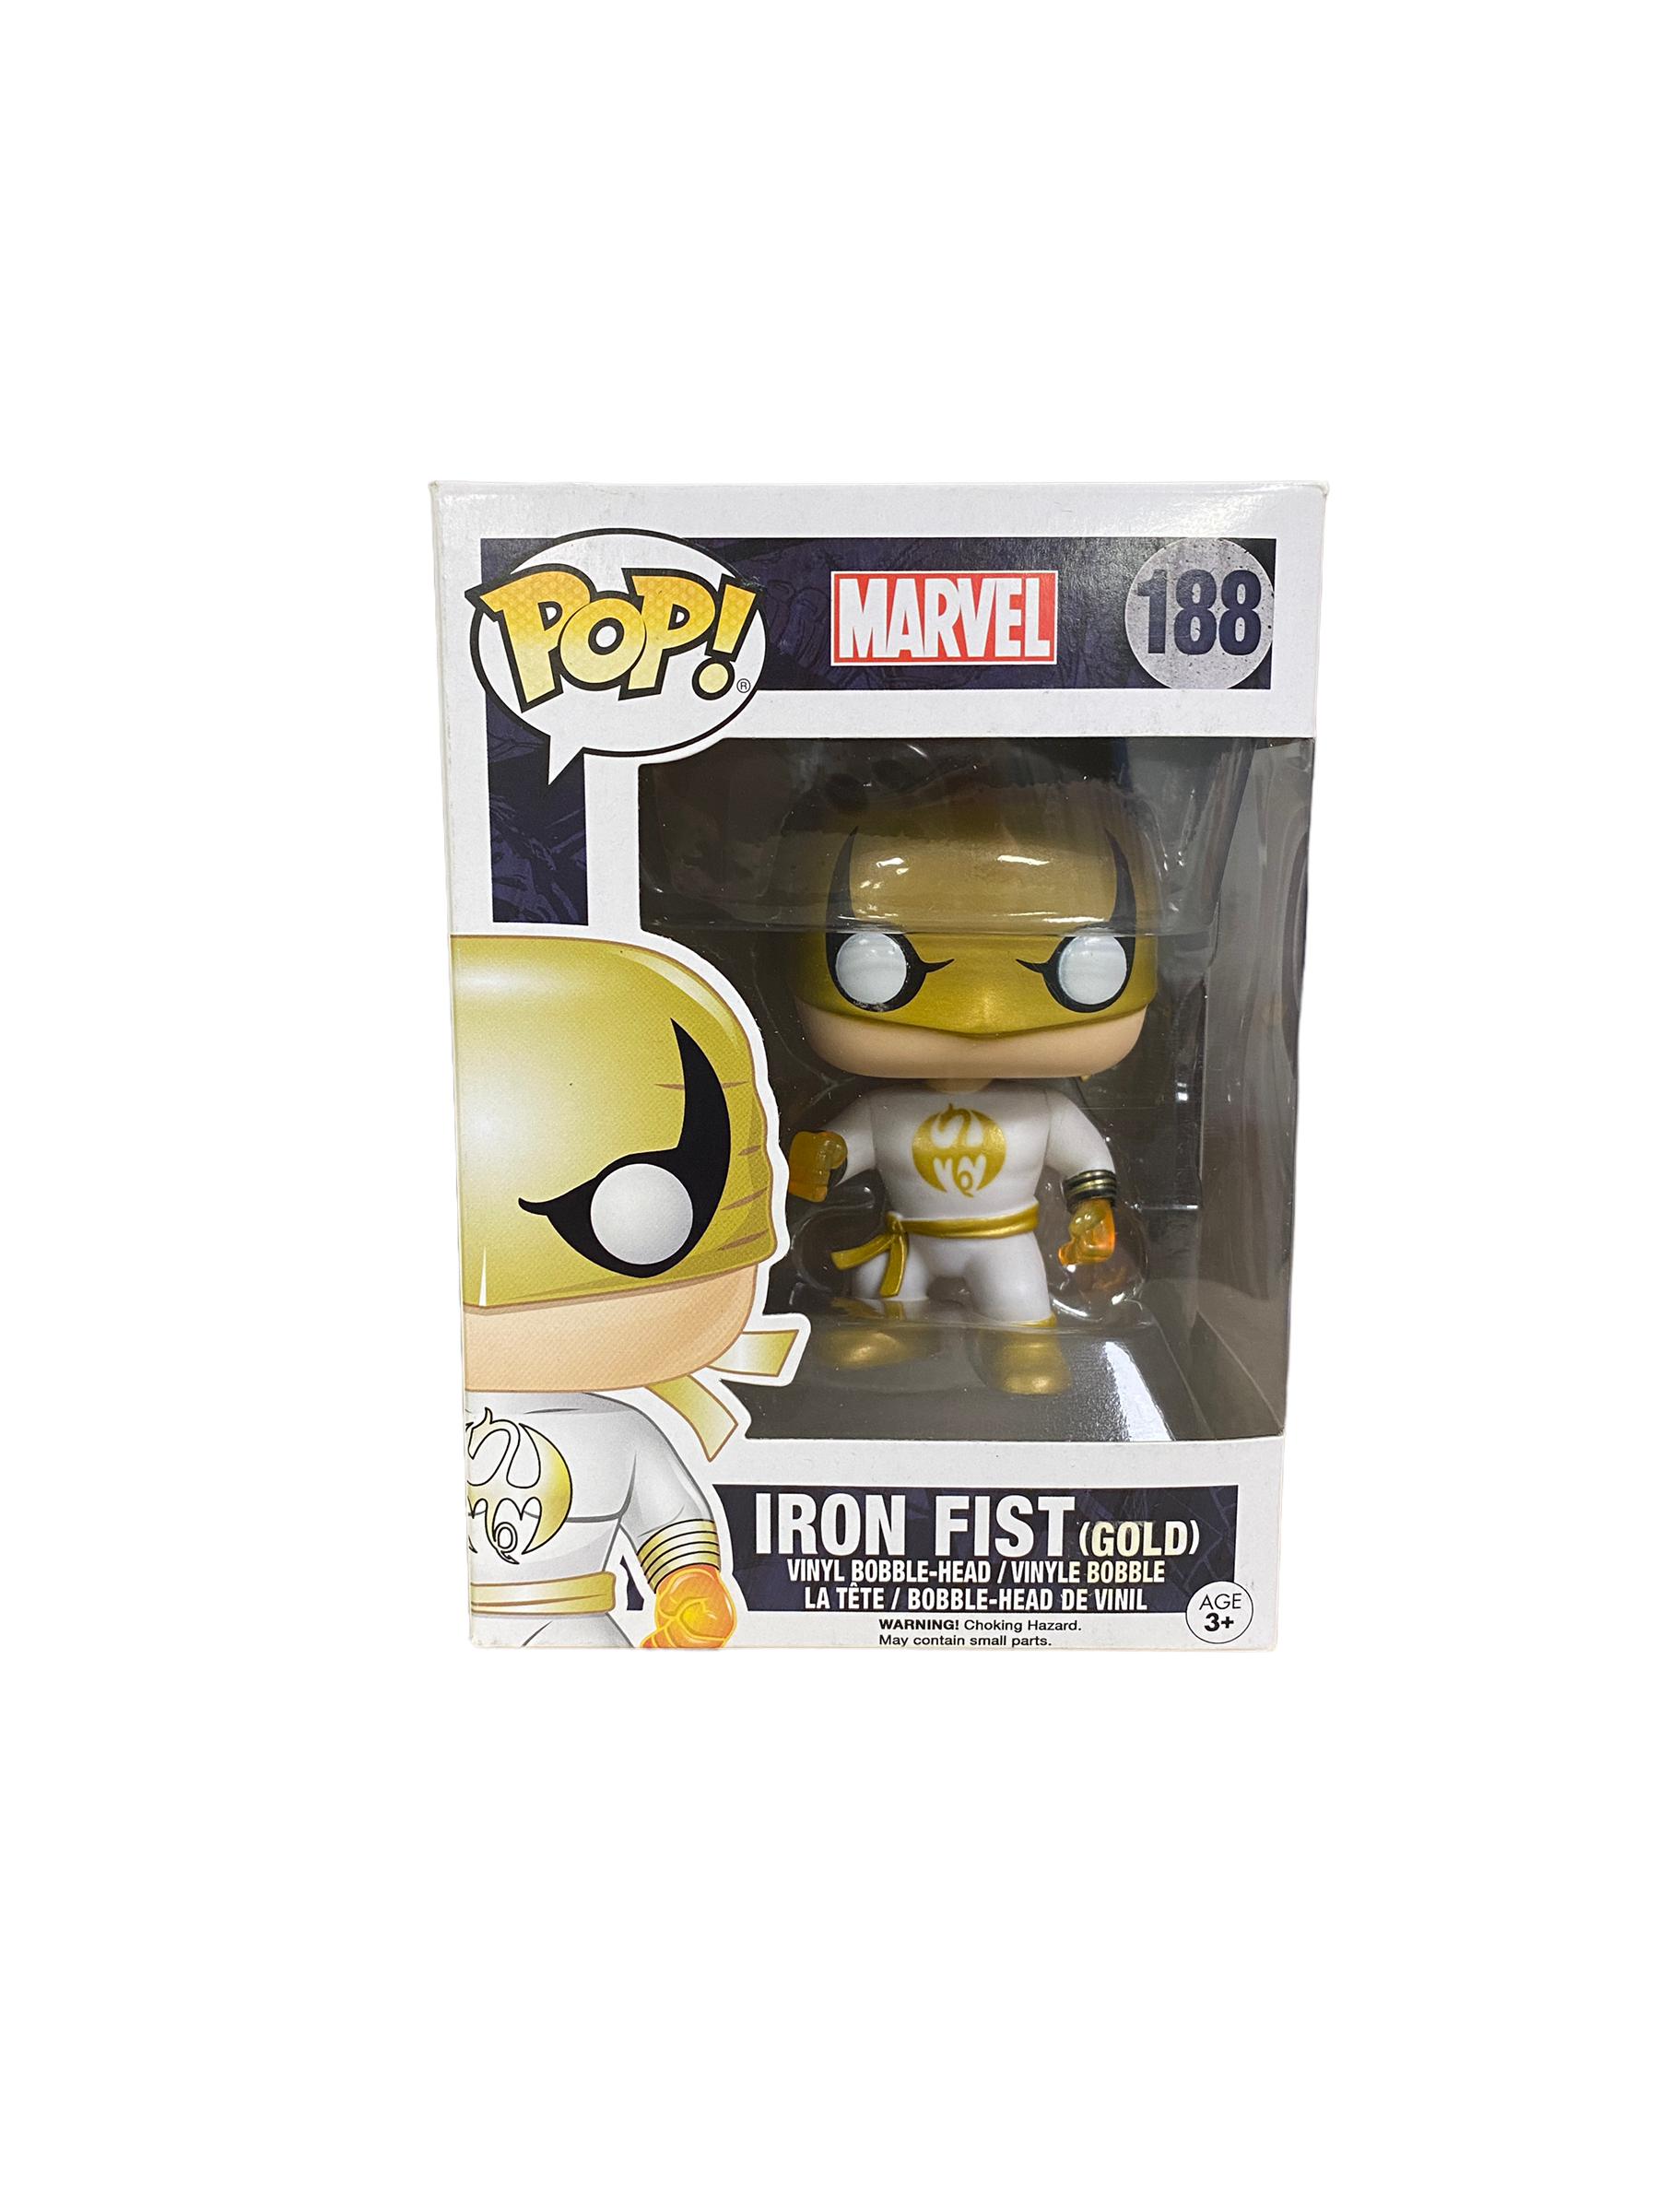 Iron Fist (Gold) #188 Funko Pop! - Marvel - 2016 Pop! - Condition 8.5/10